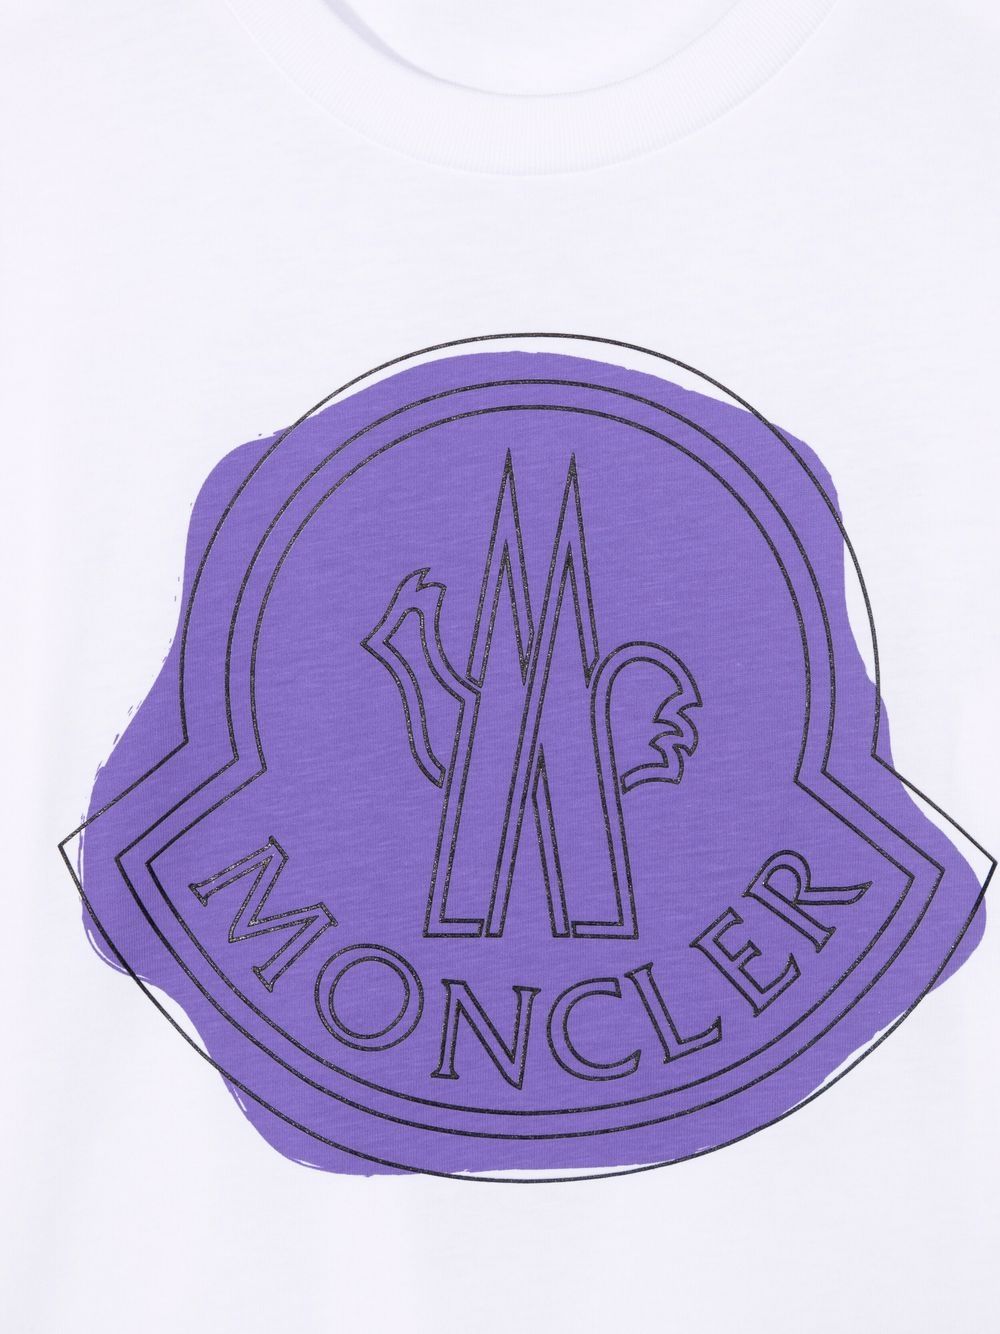 MONCLER KIDS Logo Print T-Shirt White - MAISONDEFASHION.COM